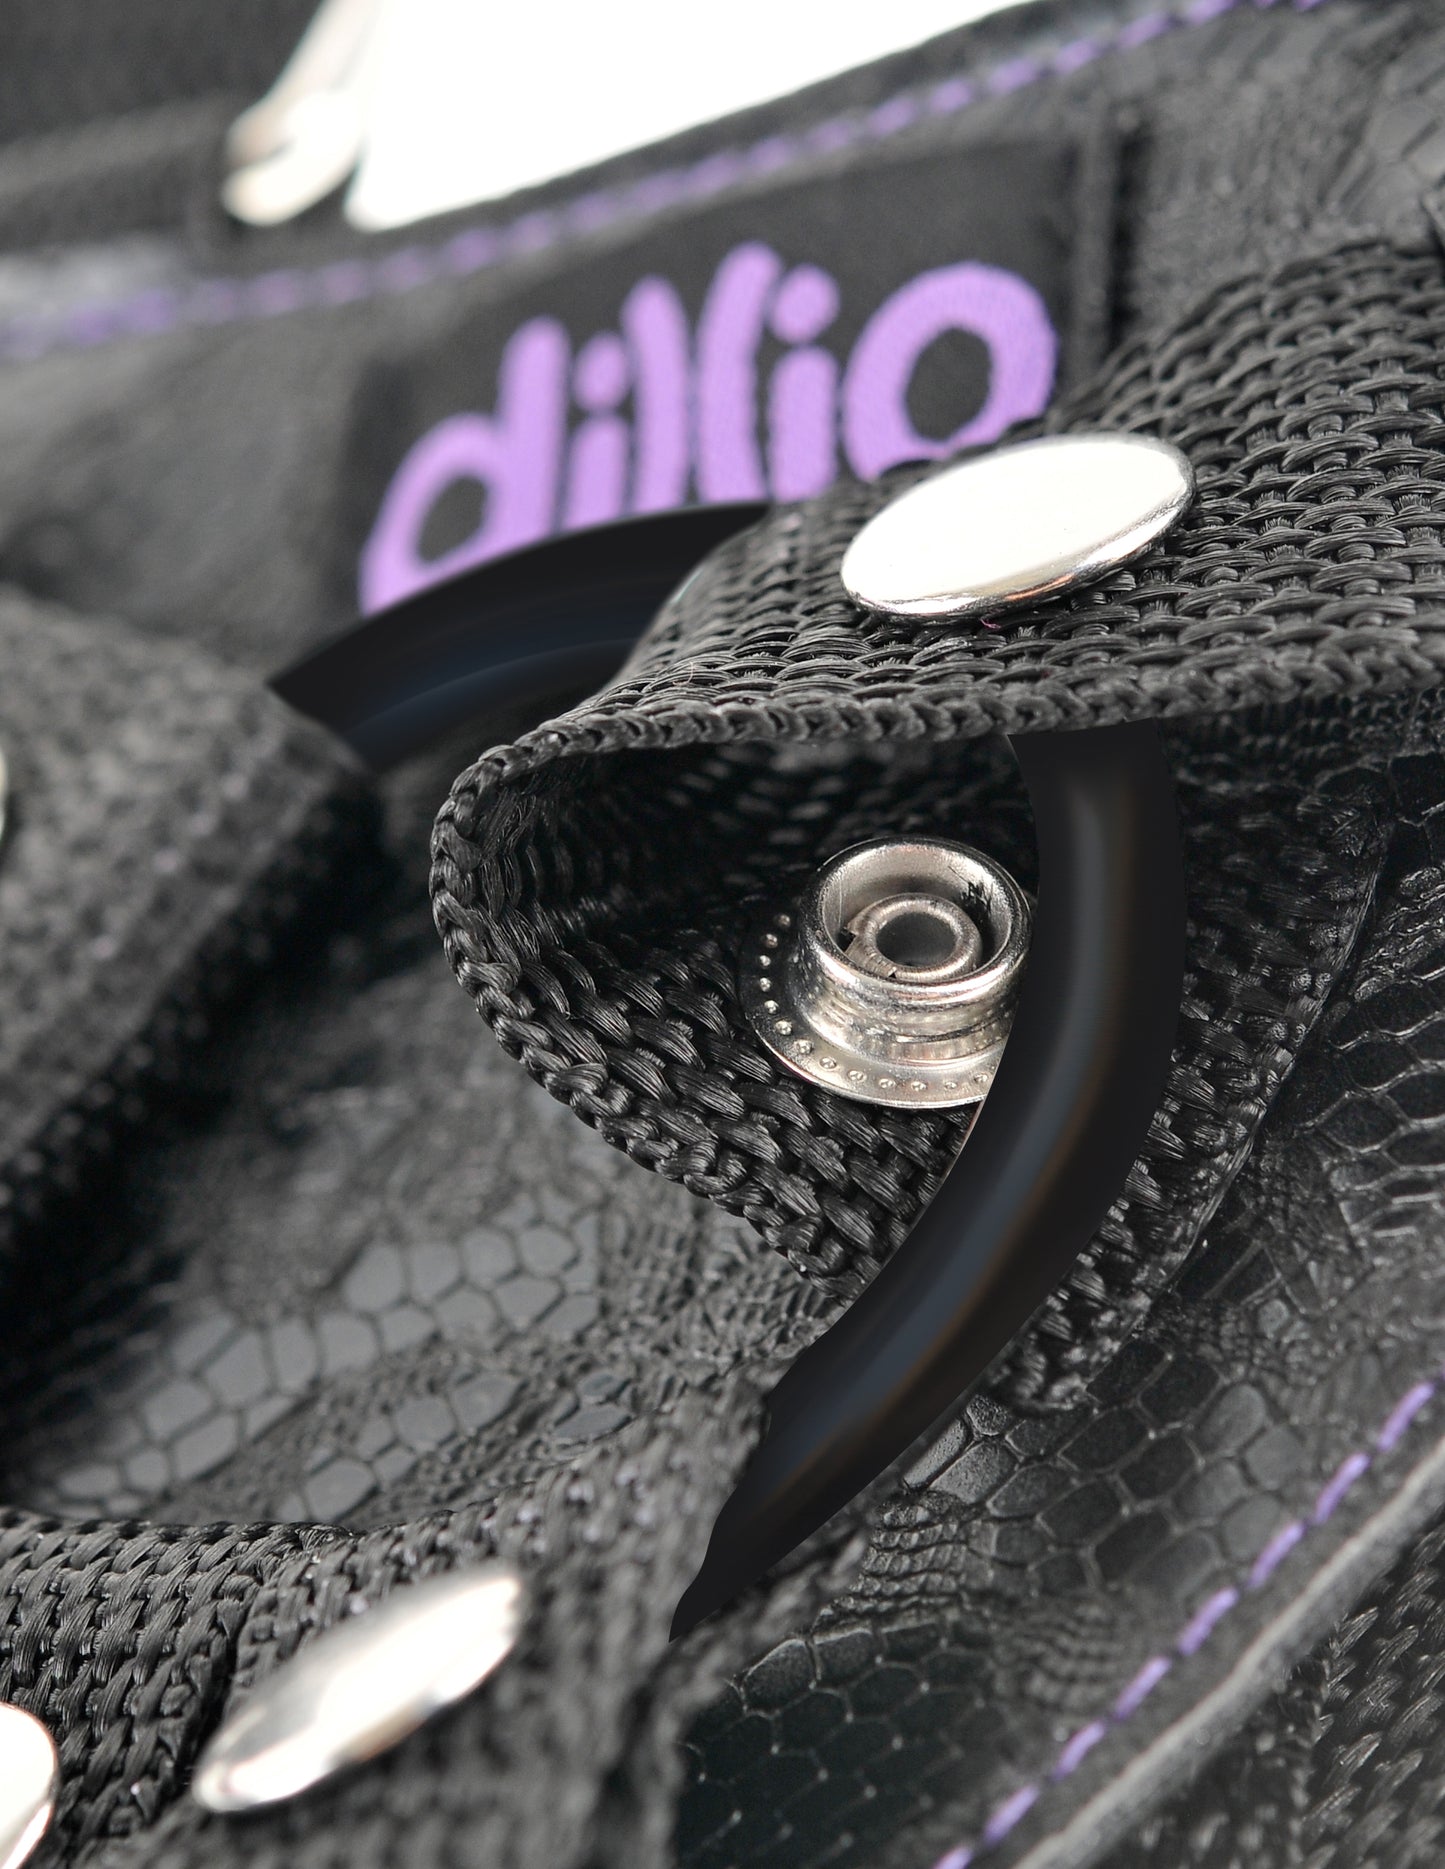 Dillio Purple - 6 Inch Strap-on Suspender Harness Set